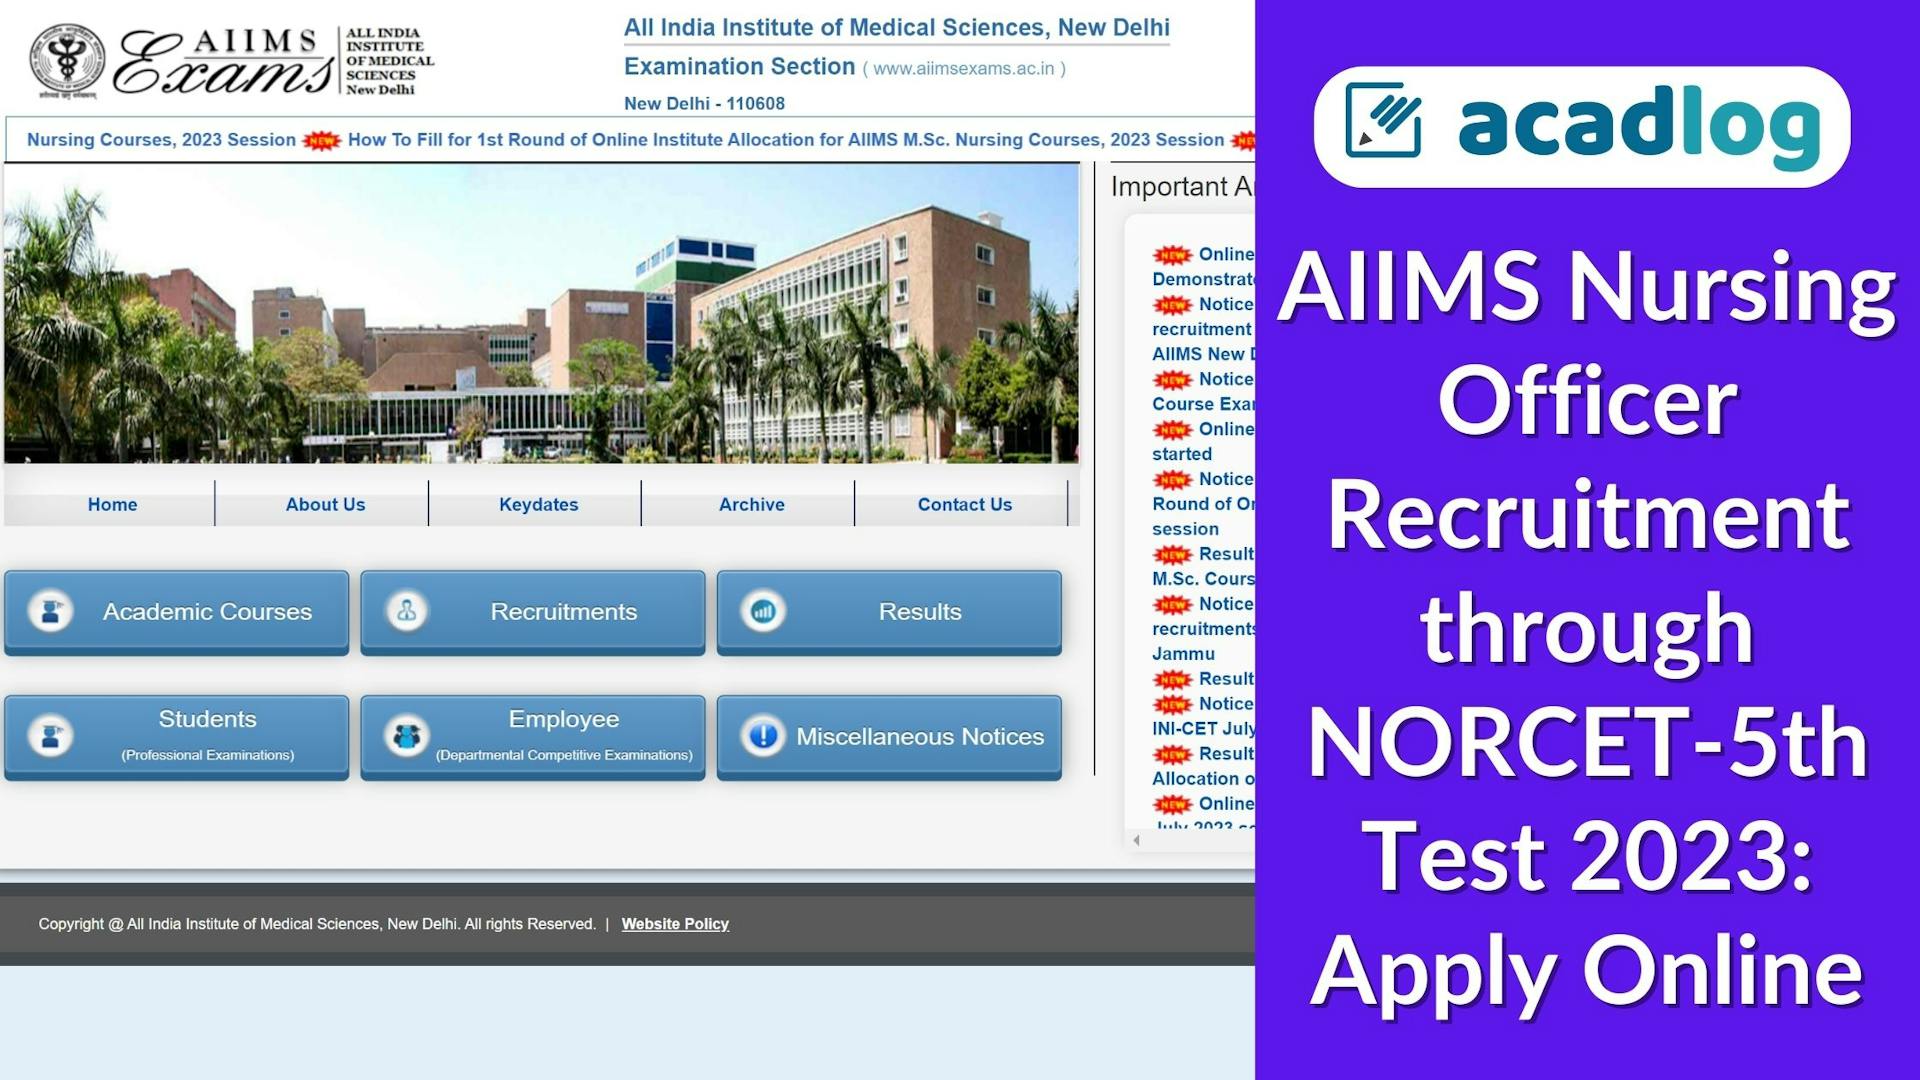 AIIMS Nursing Officer Recruitment through NORCET 5th Test 2023: Apply Online